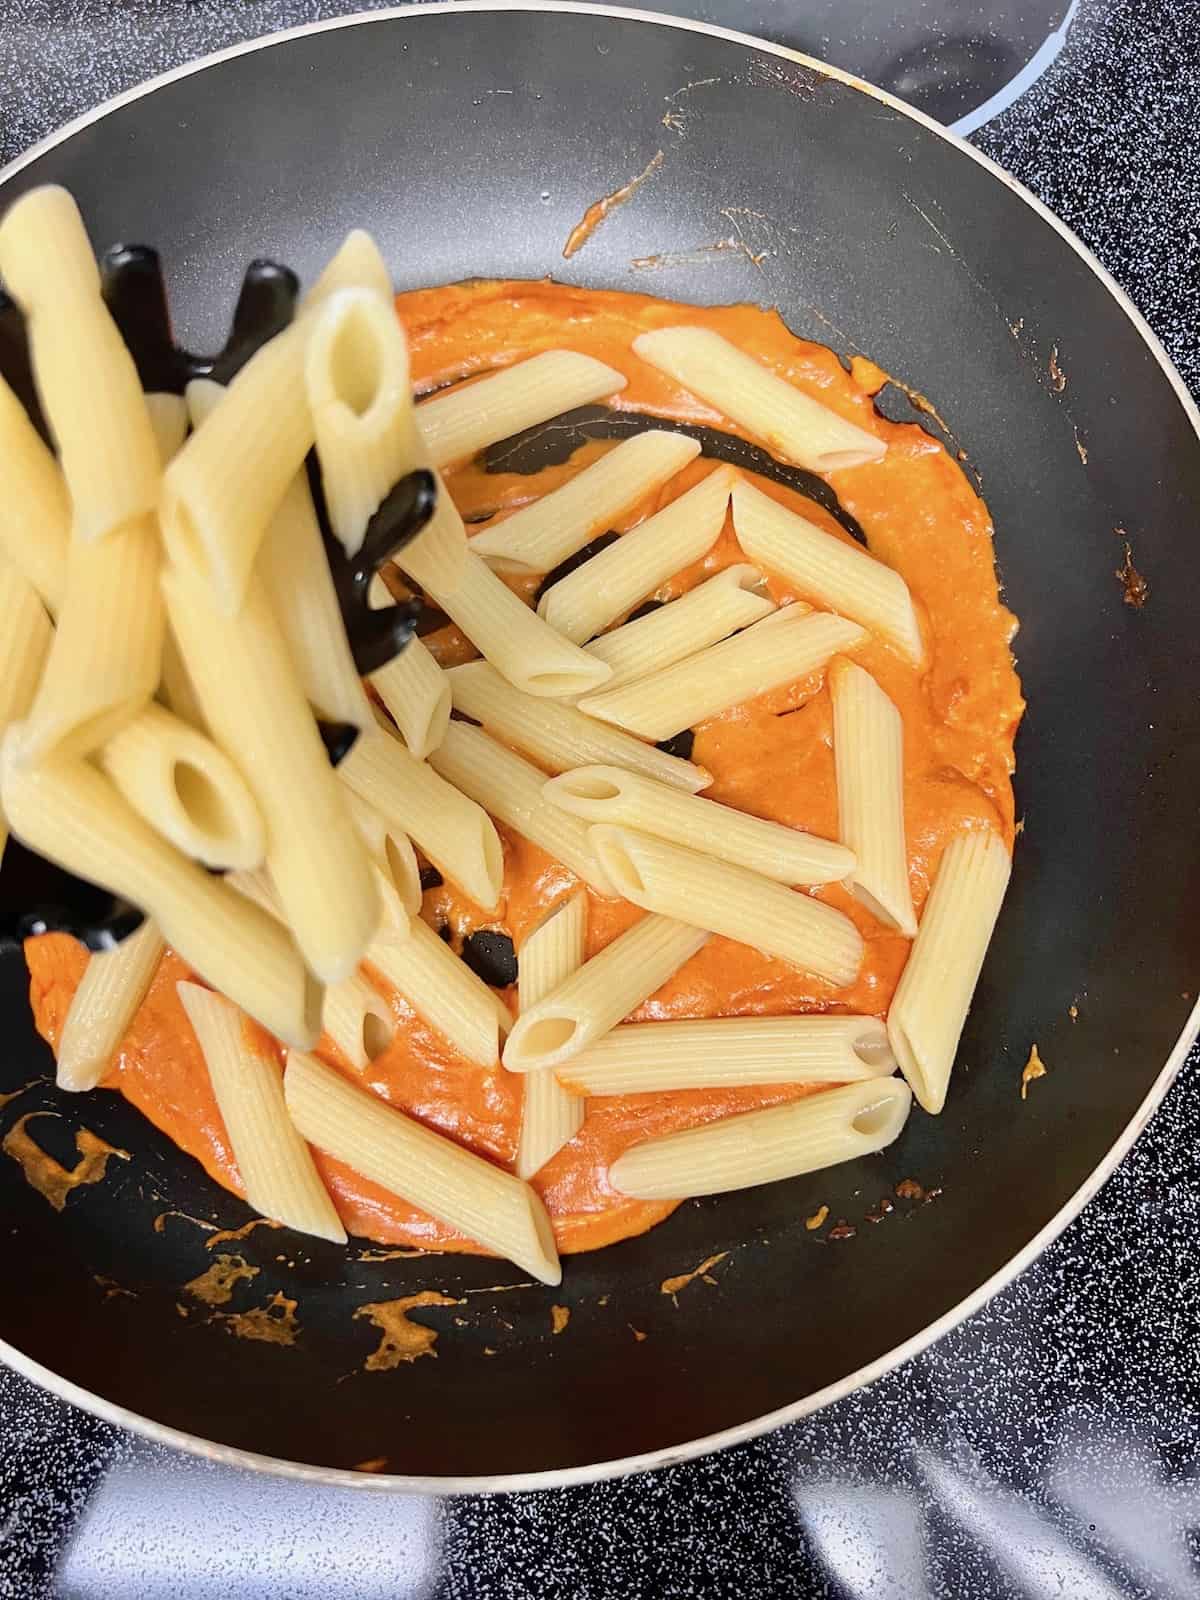 Adding pasta to the pan.